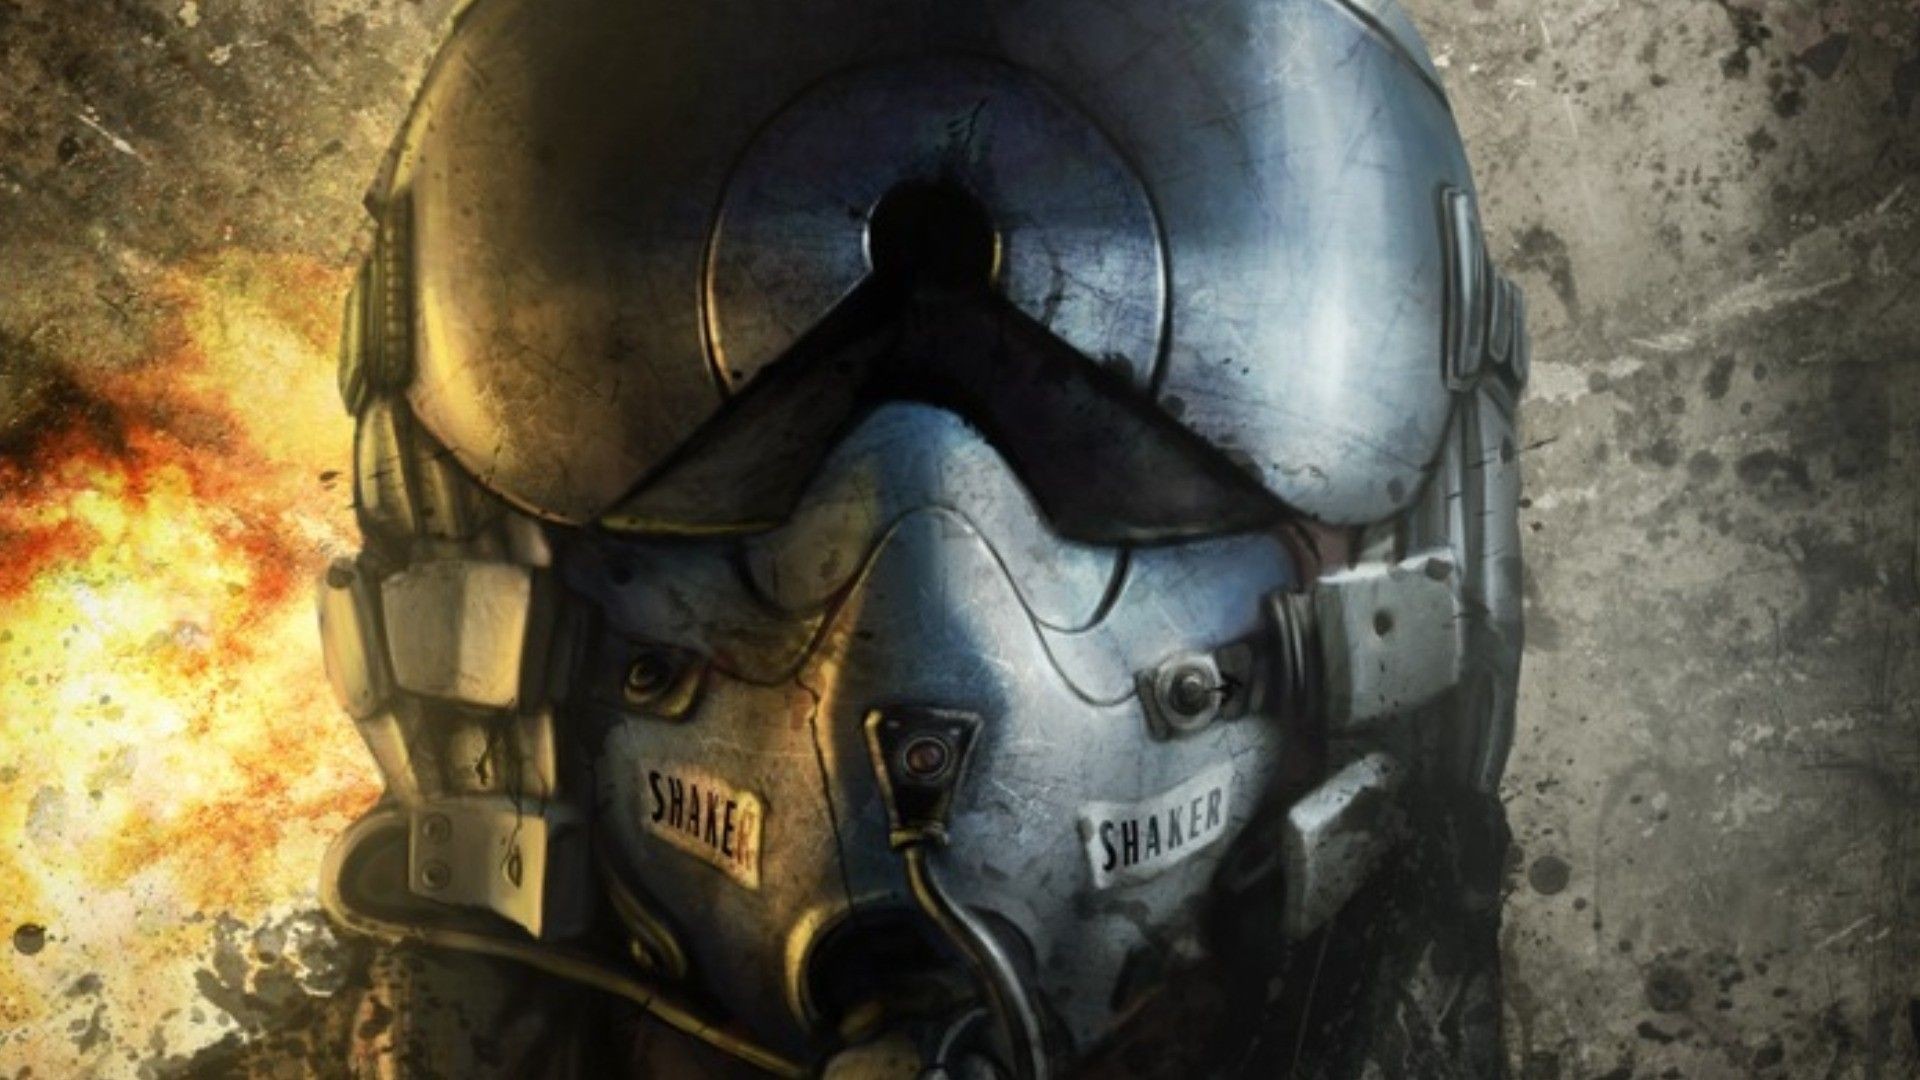 General 1920x1080 pilot helmet explosion artwork